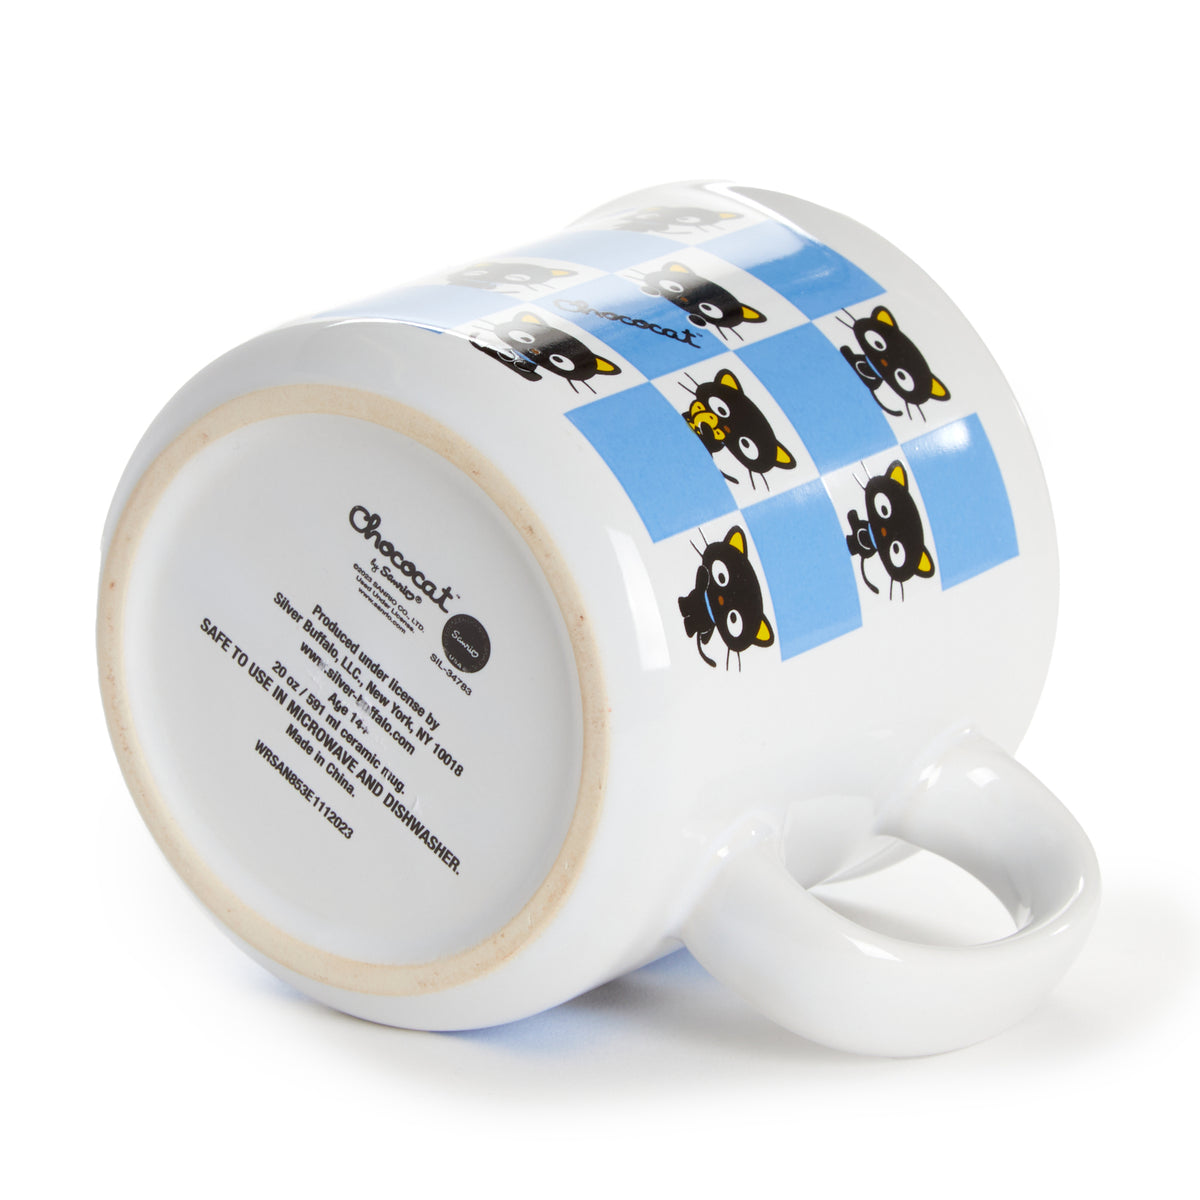 Chococat Checkered Ceramic Mug Home Goods Silver Buffalo LLC   